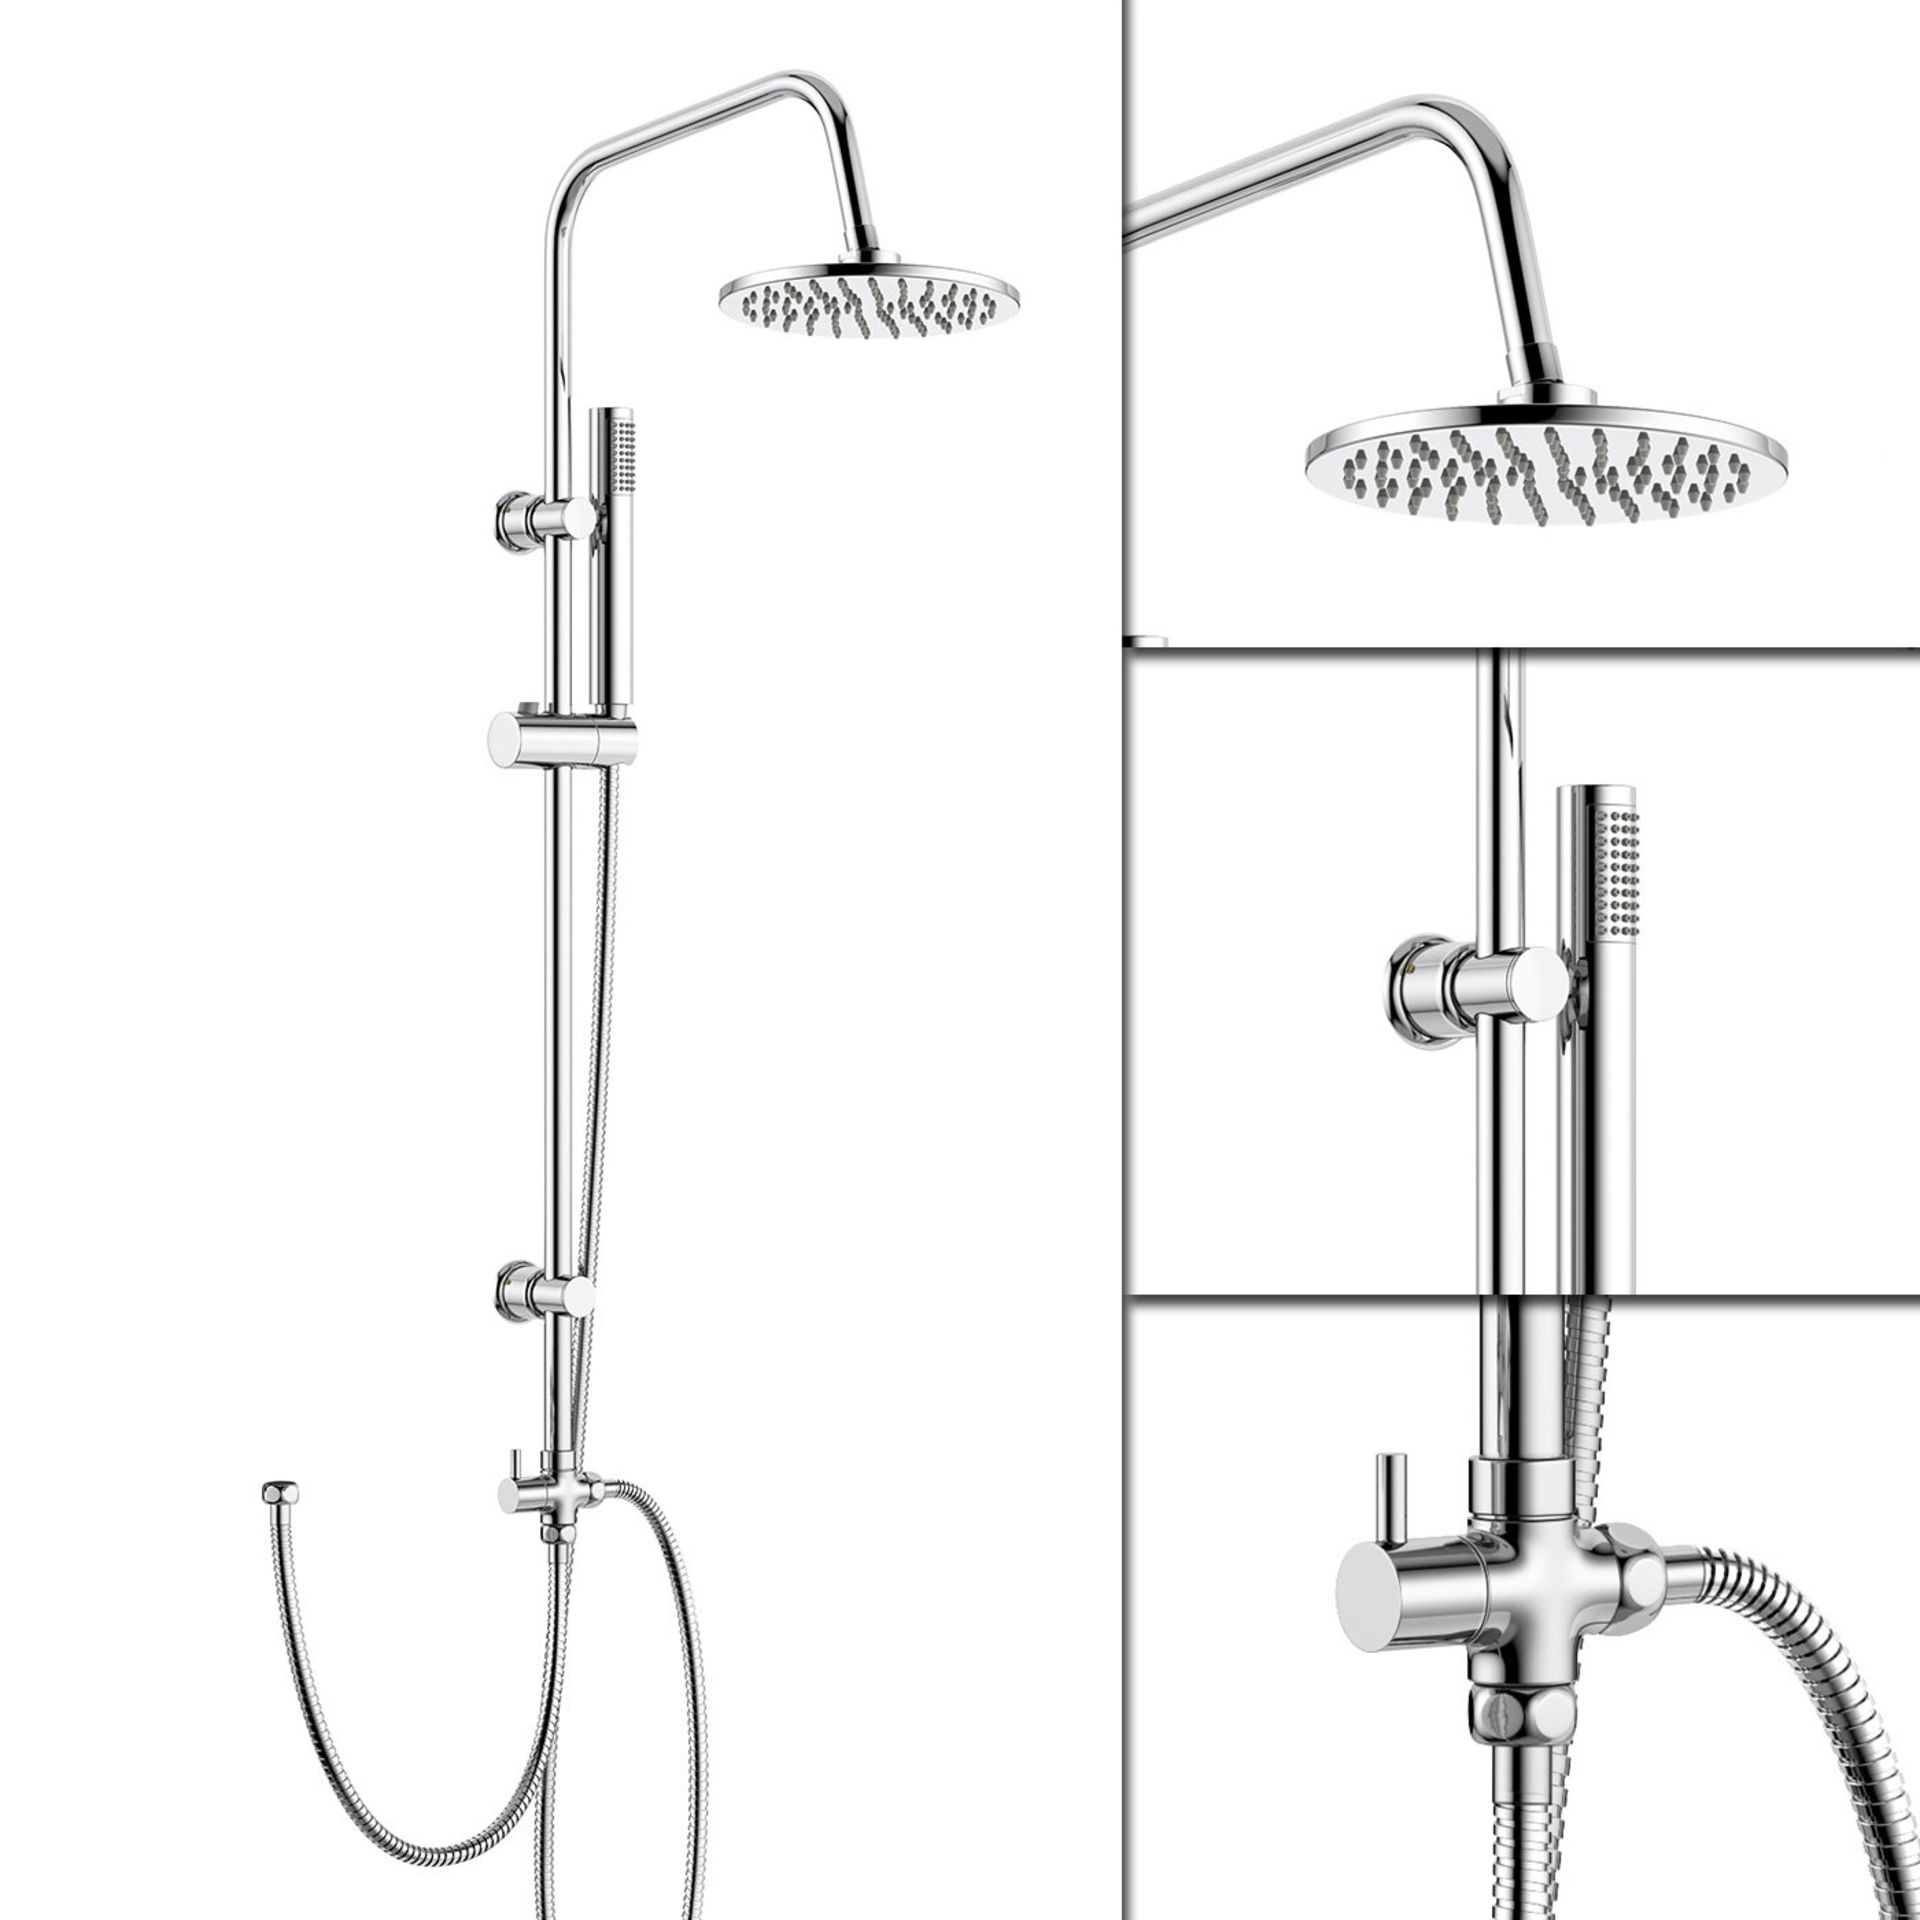 Modern Chrome Riser Rail Mixer Round Shower Head Kit for Bath Tap. Chrome effect finish Latest... - Image 3 of 6